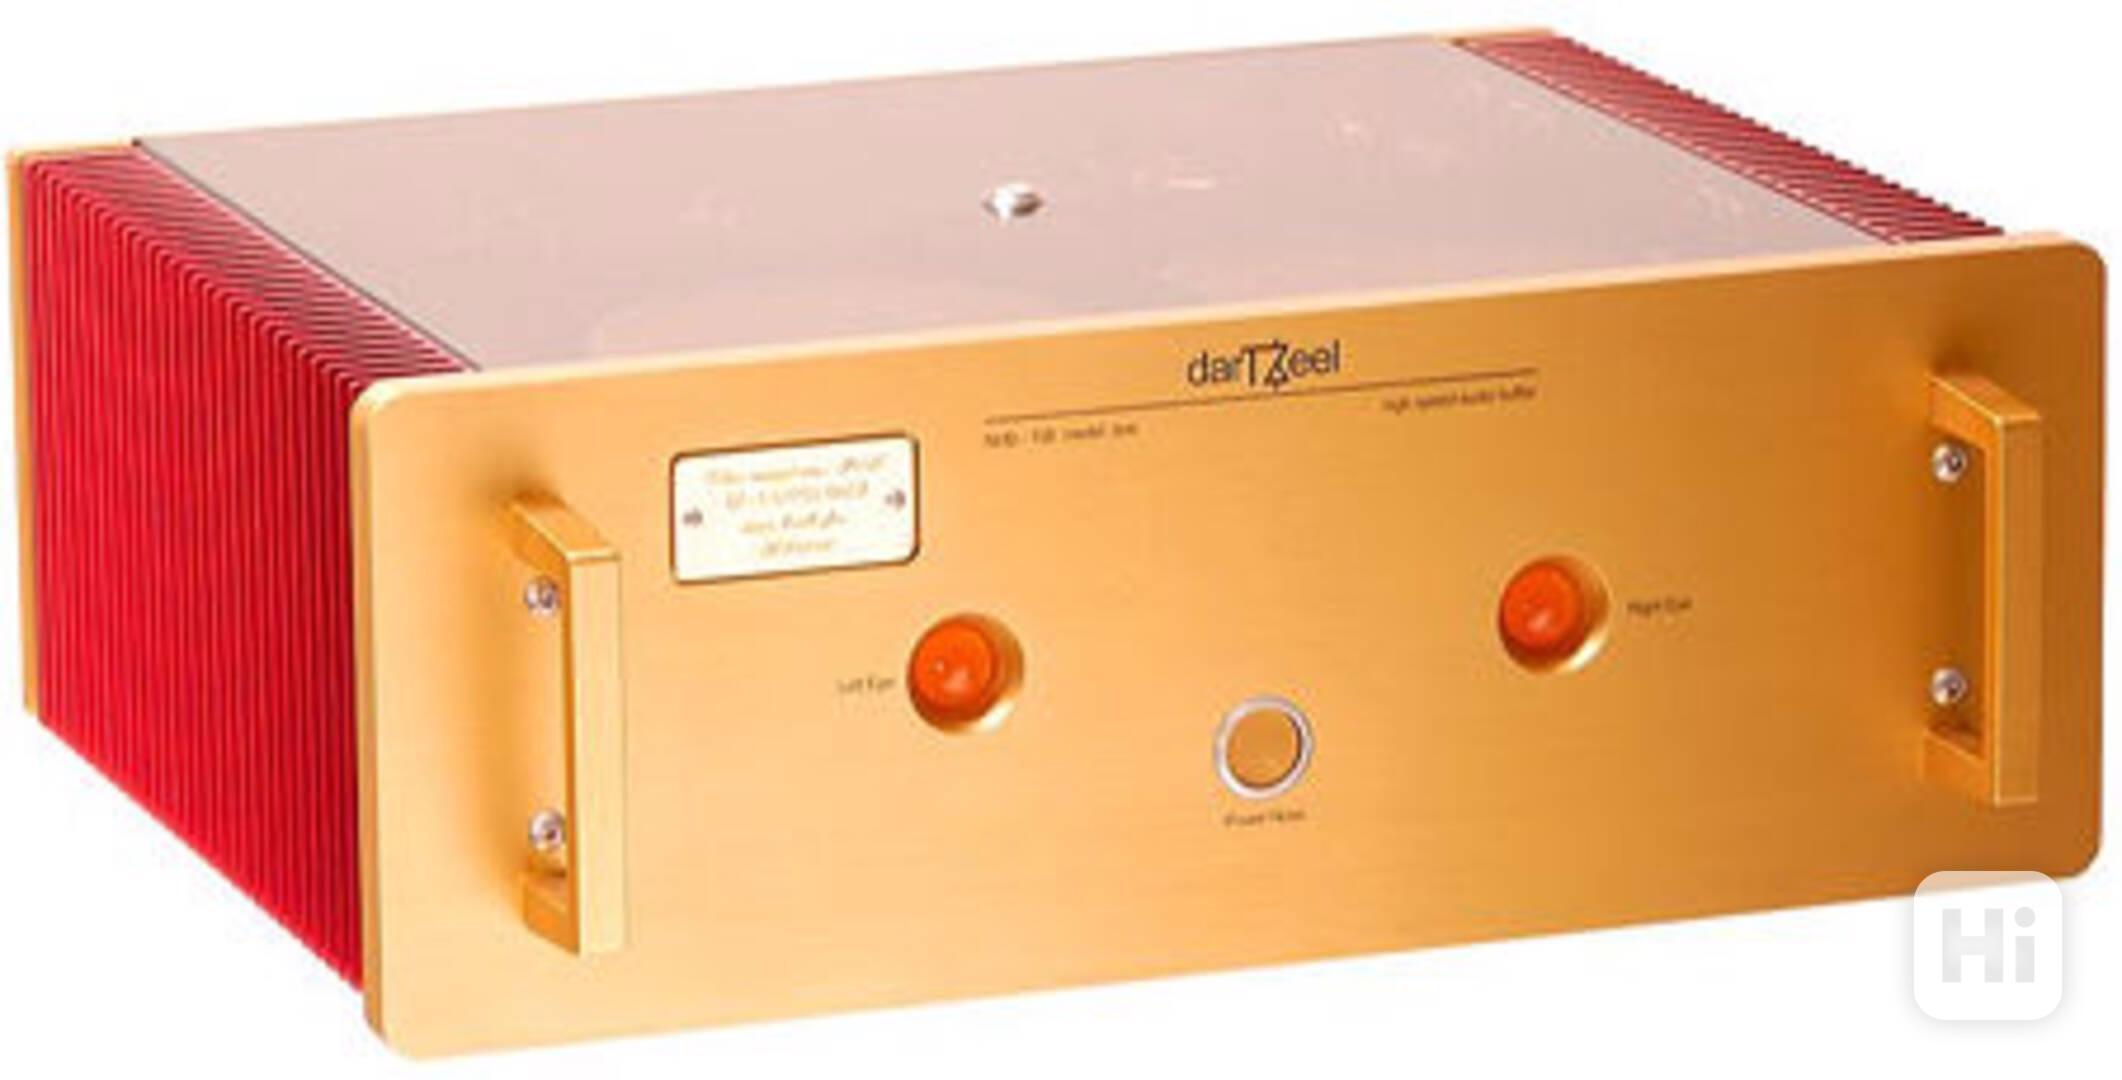 darTZeel nhb-108 model B amplifier - foto 1